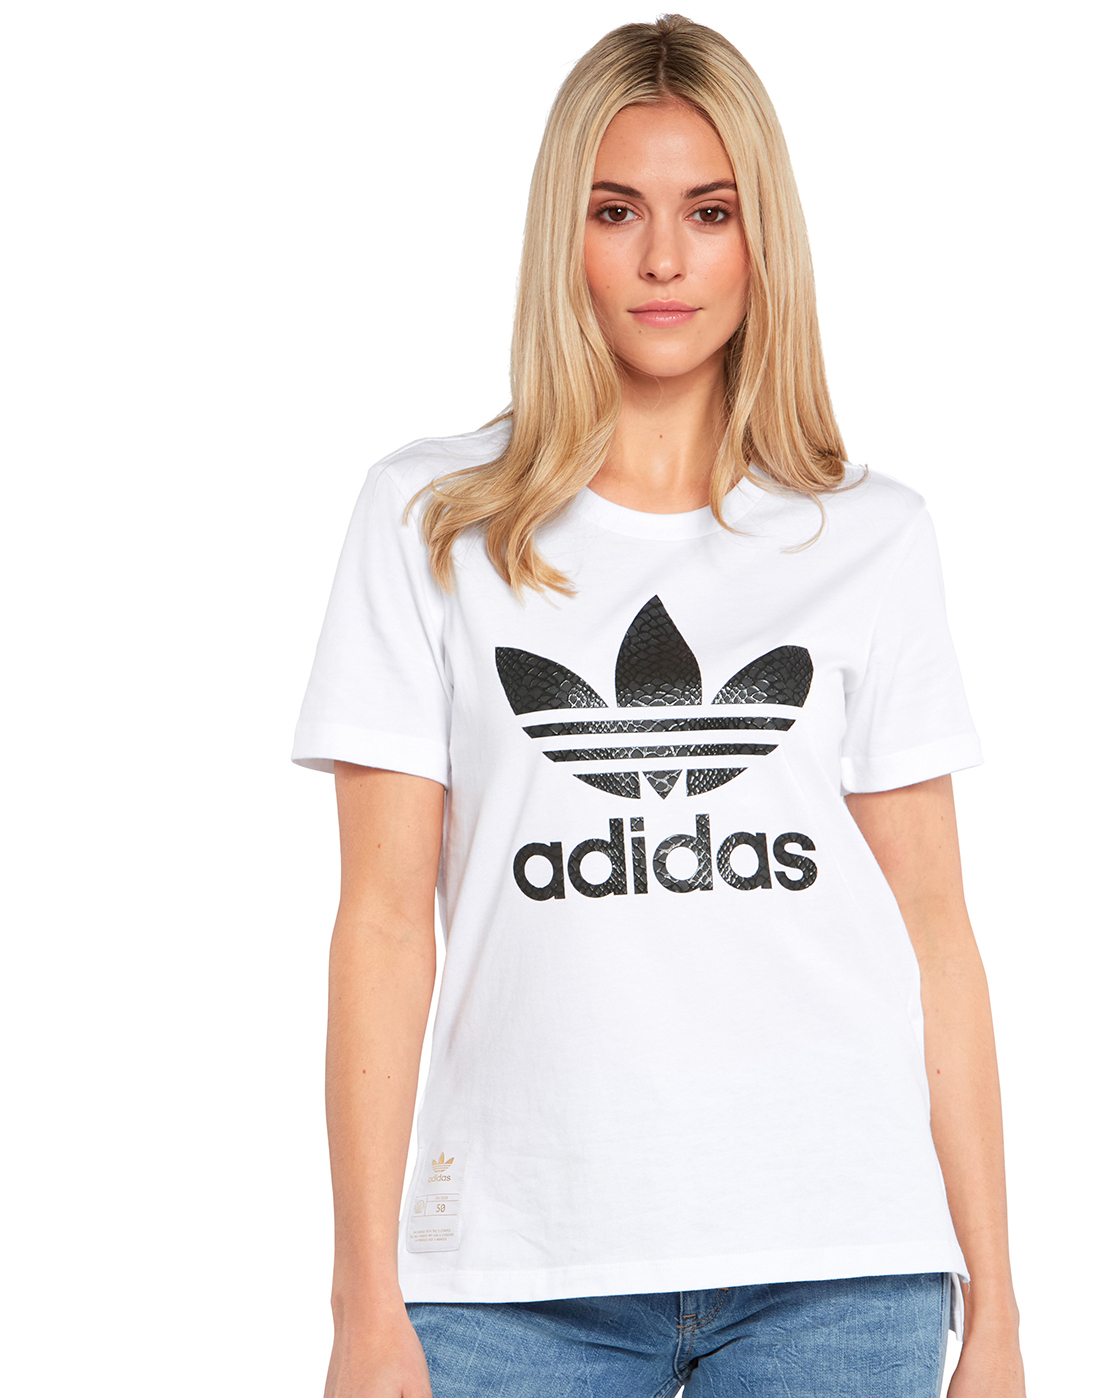 adidas Originals Womens Trefoil T-Shirt - White | Life Style Sports IE